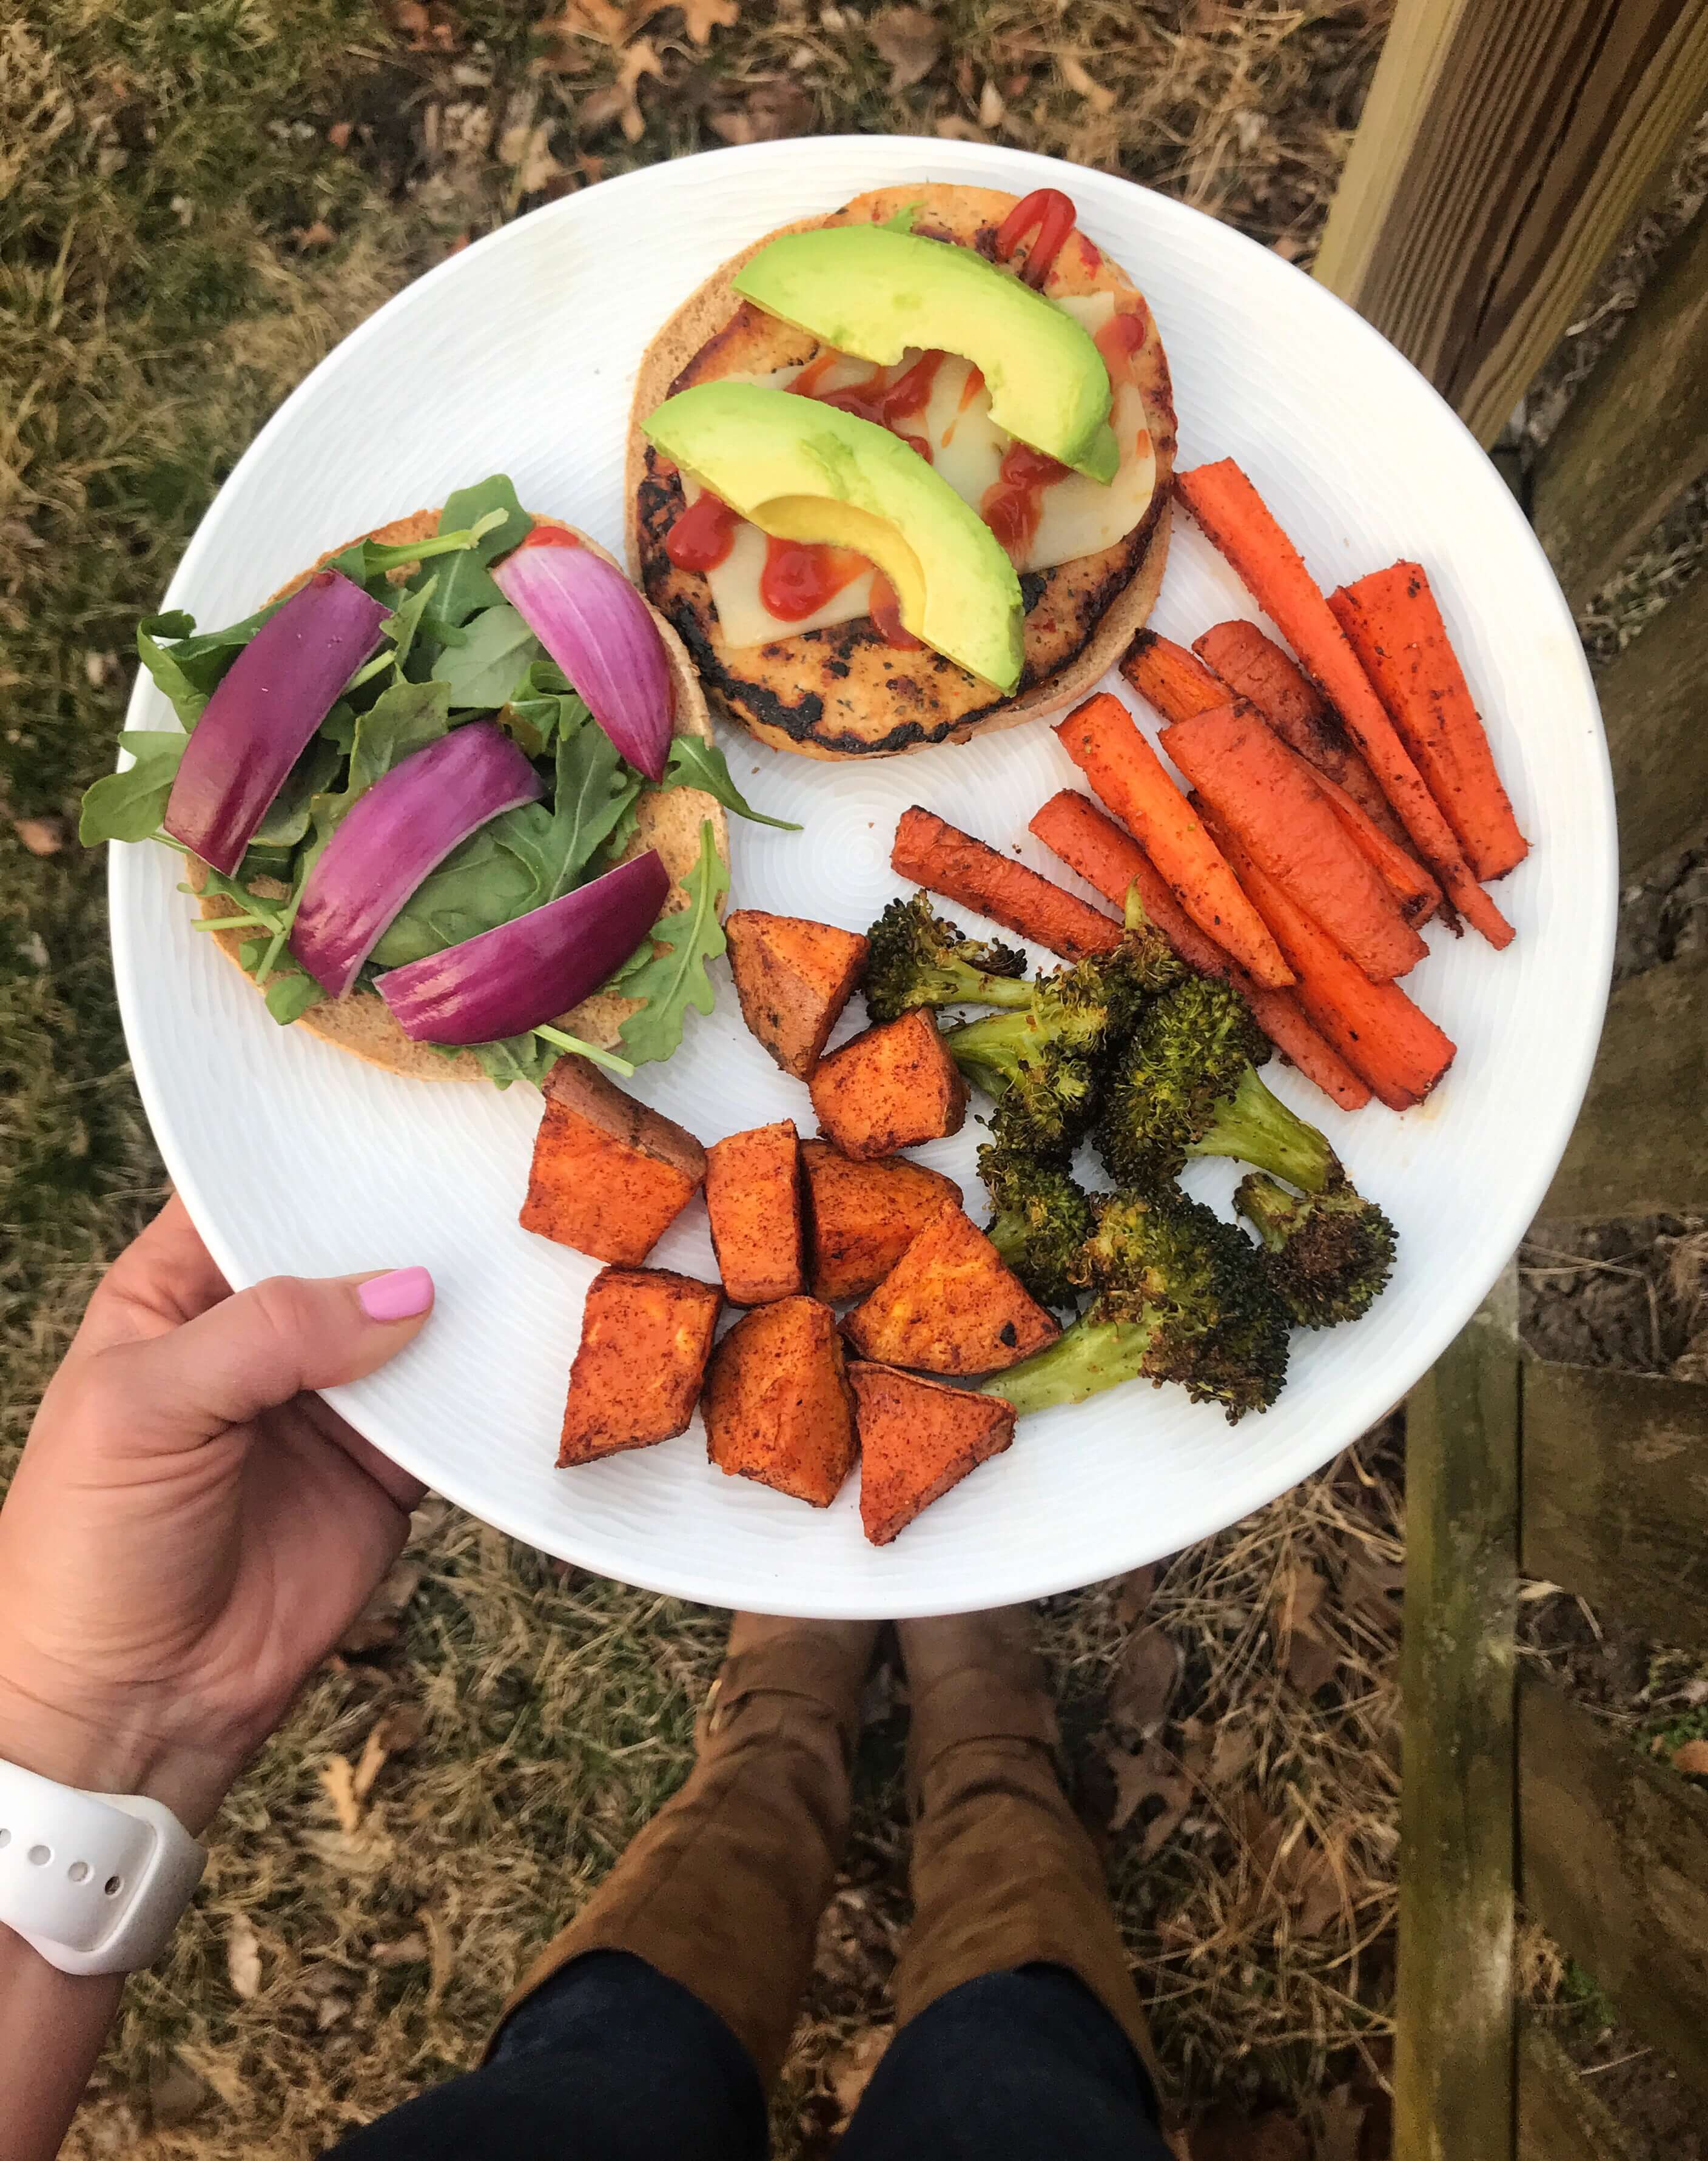 healthy foods dietitians keep in their fridges, roasted vegetables, chicken burger